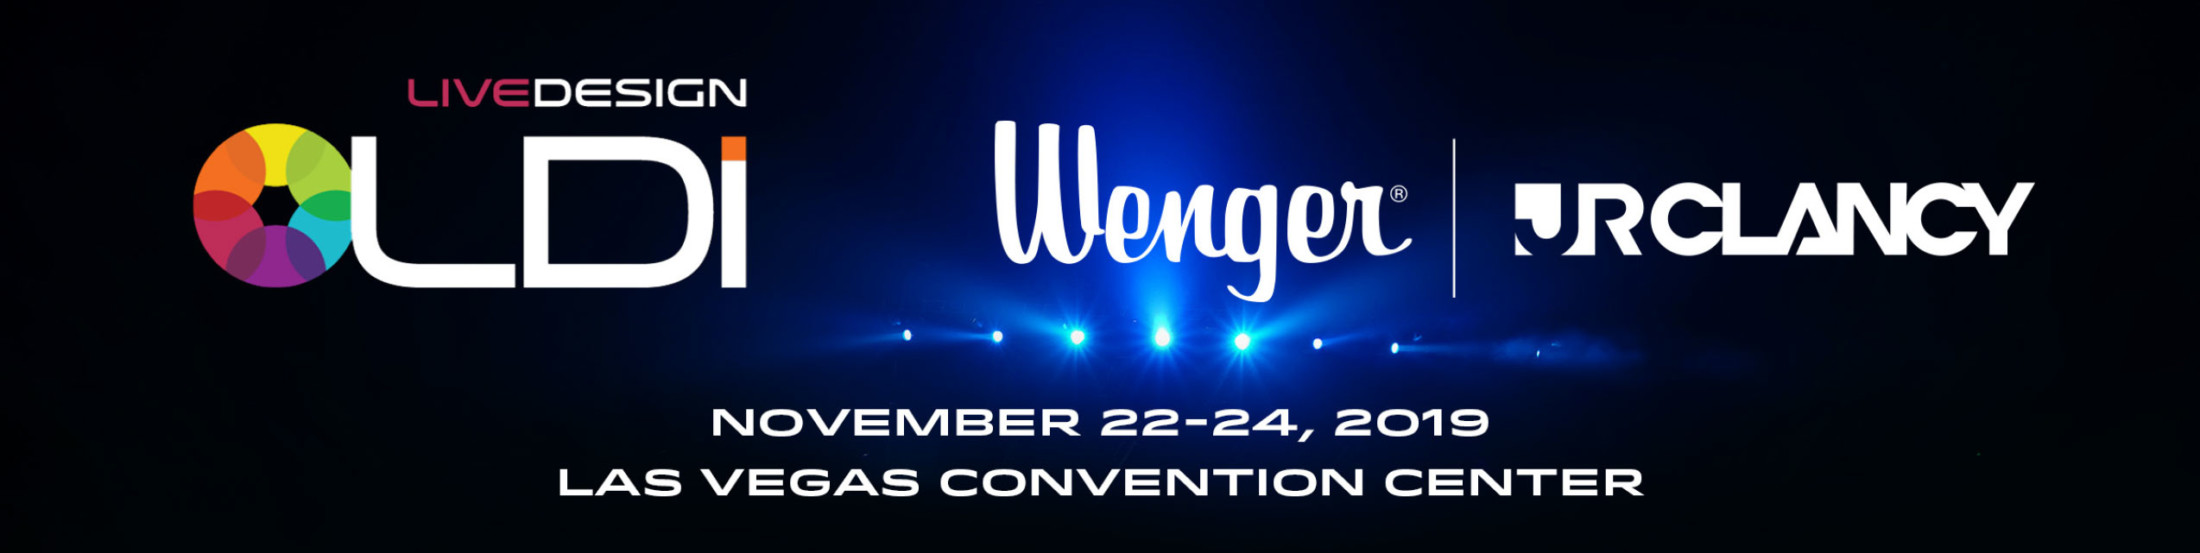 LDI | November 22-24, 2019 | Las Vegas Convention Center